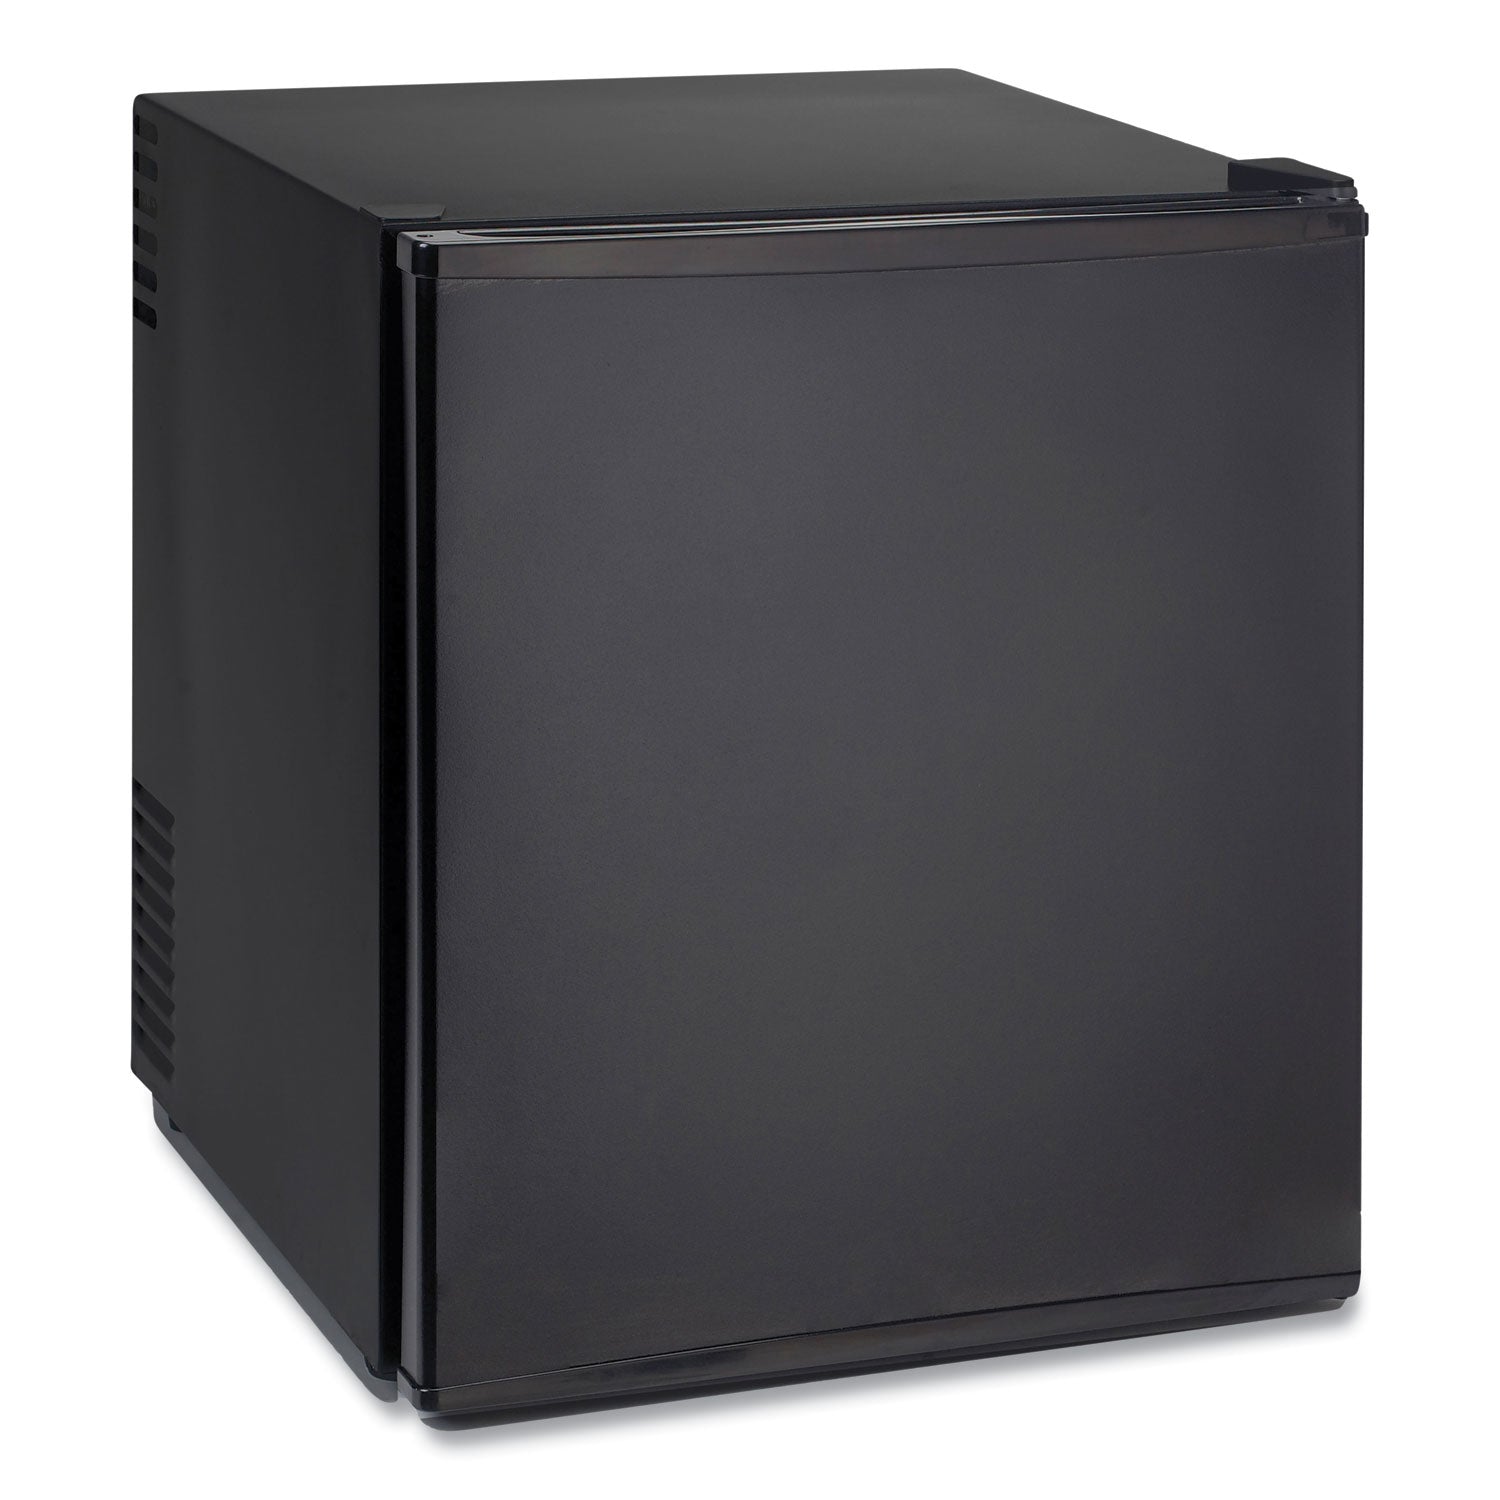 17-cuft-superconductor-compact-refrigerator-black_avasar1701n1b - 1